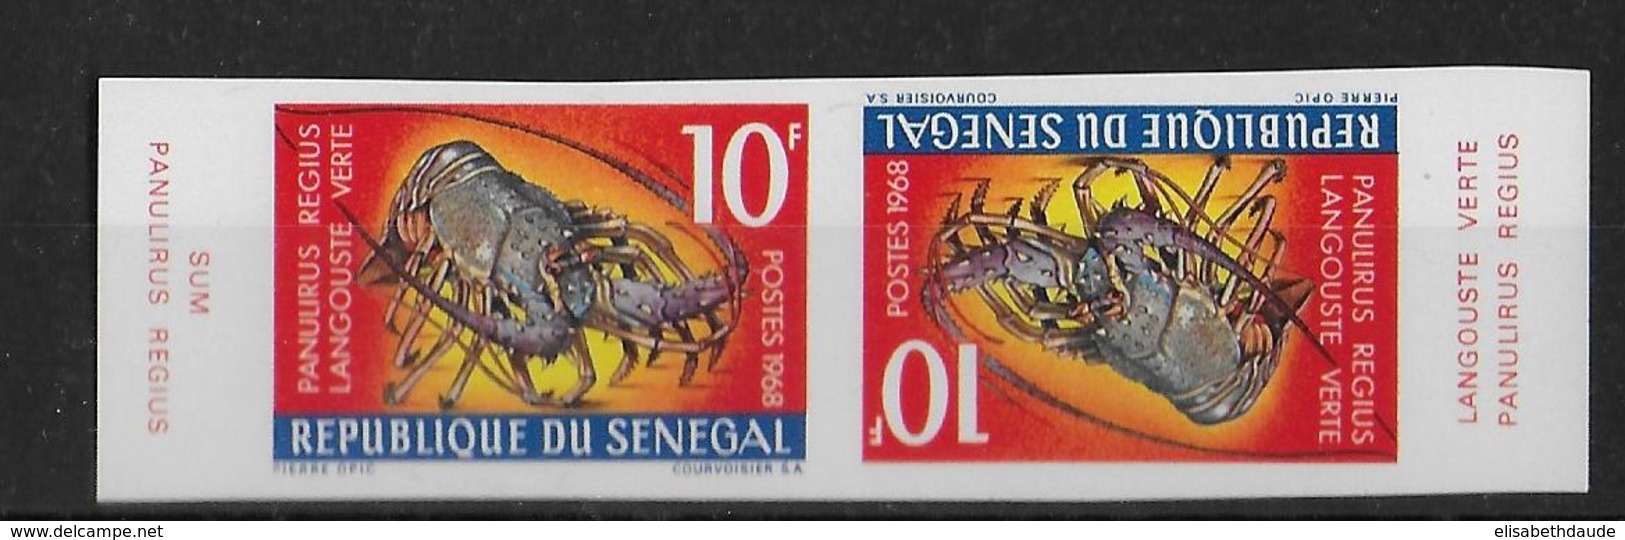 SENEGAL - CRUSTACES FAUNE MARINE - YT 305 PAIRE TETE-BECHE ** NON DENTELE - RARE - Senegal (1960-...)